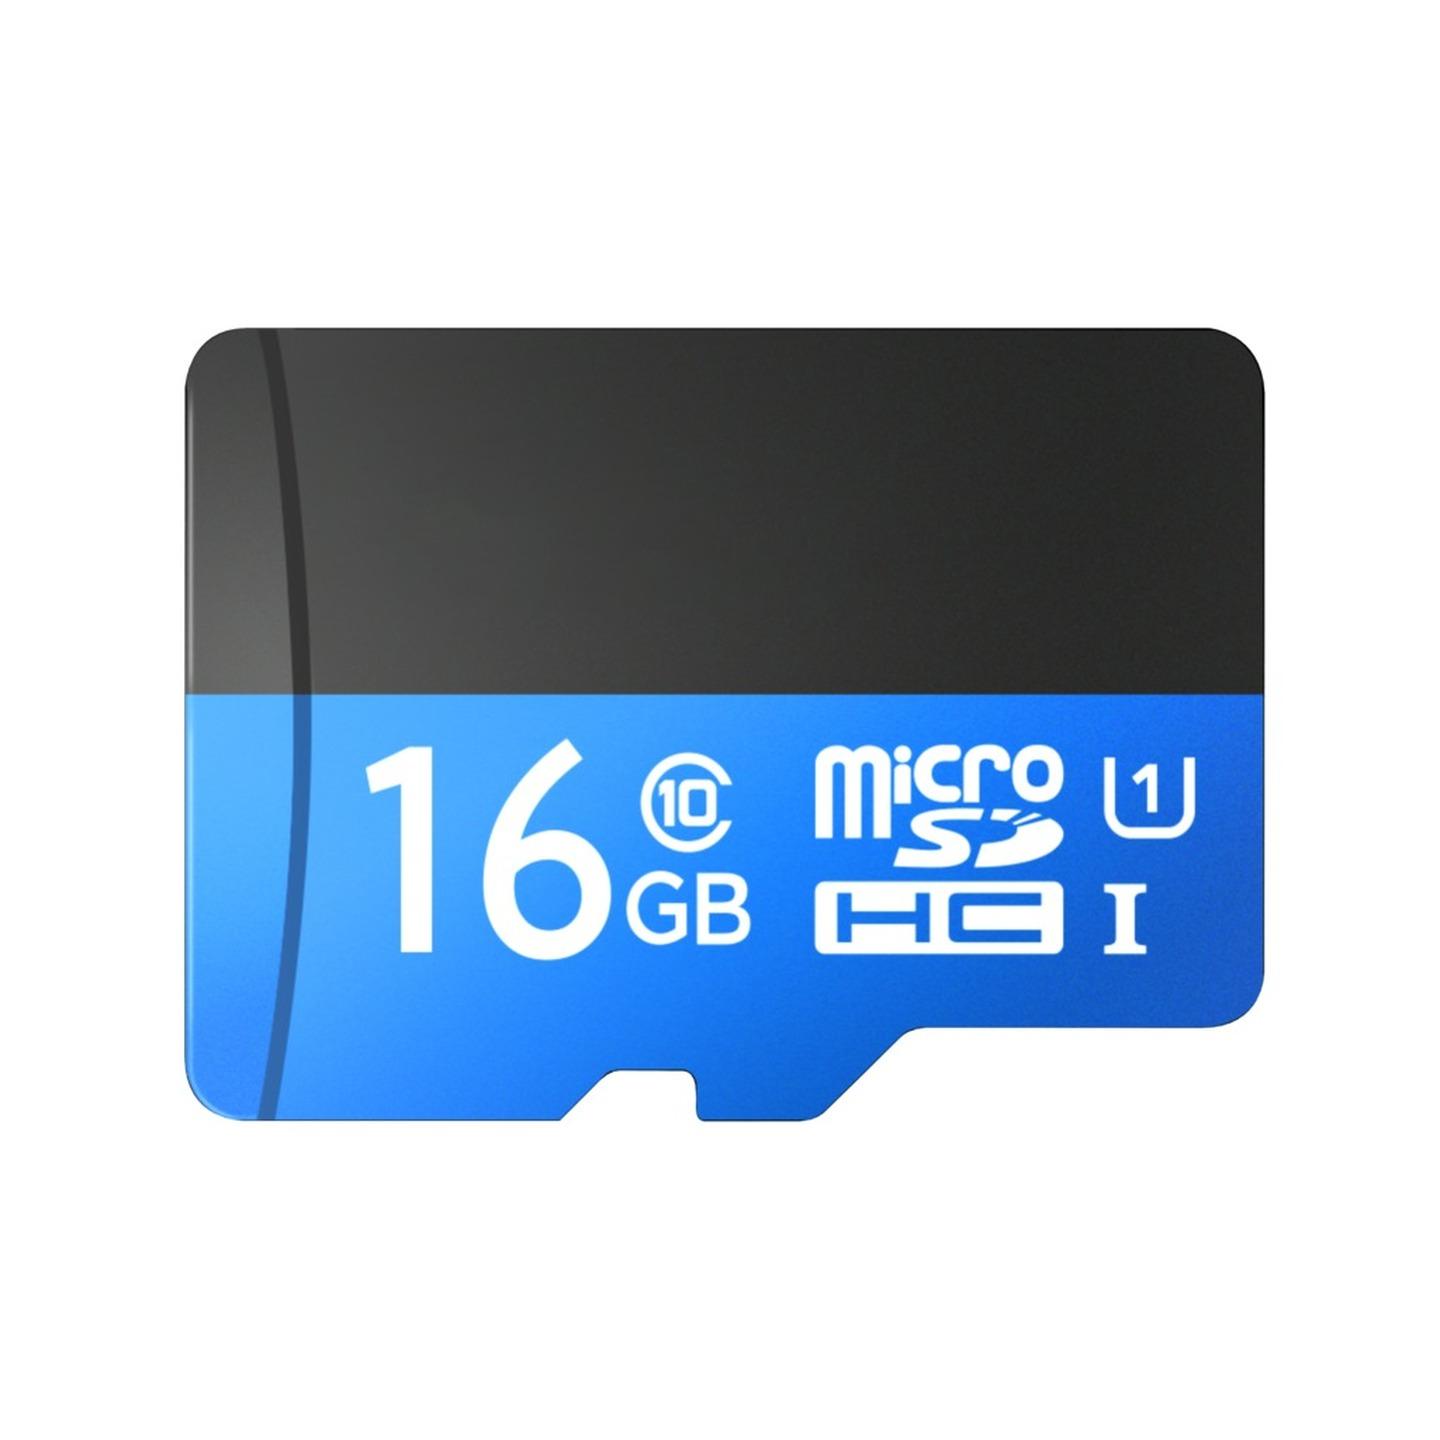 16GB Micro SDXC Class 10 Reads 55MB/s Writes 20MB/s